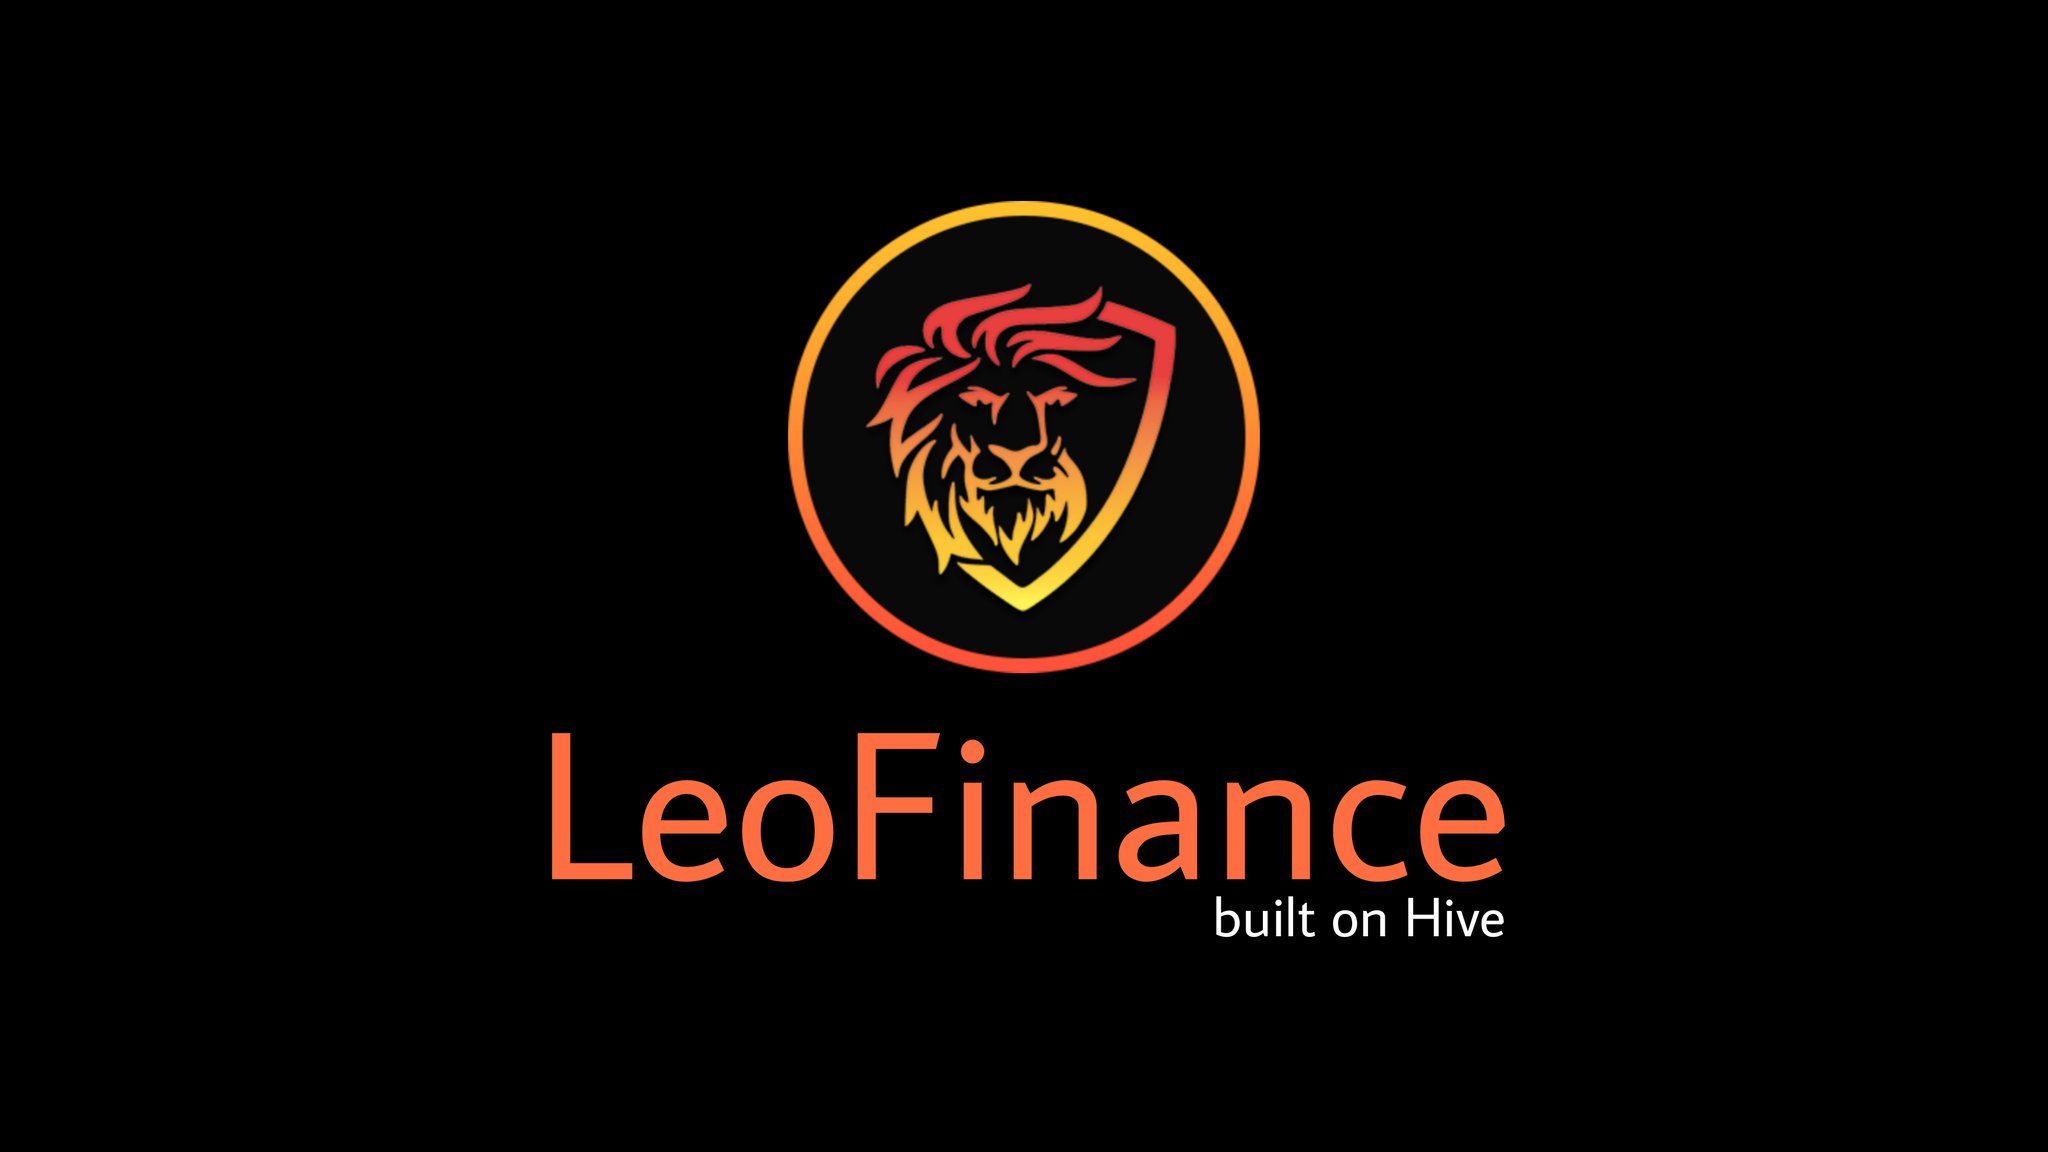 LeoFinance is the best Hive community.